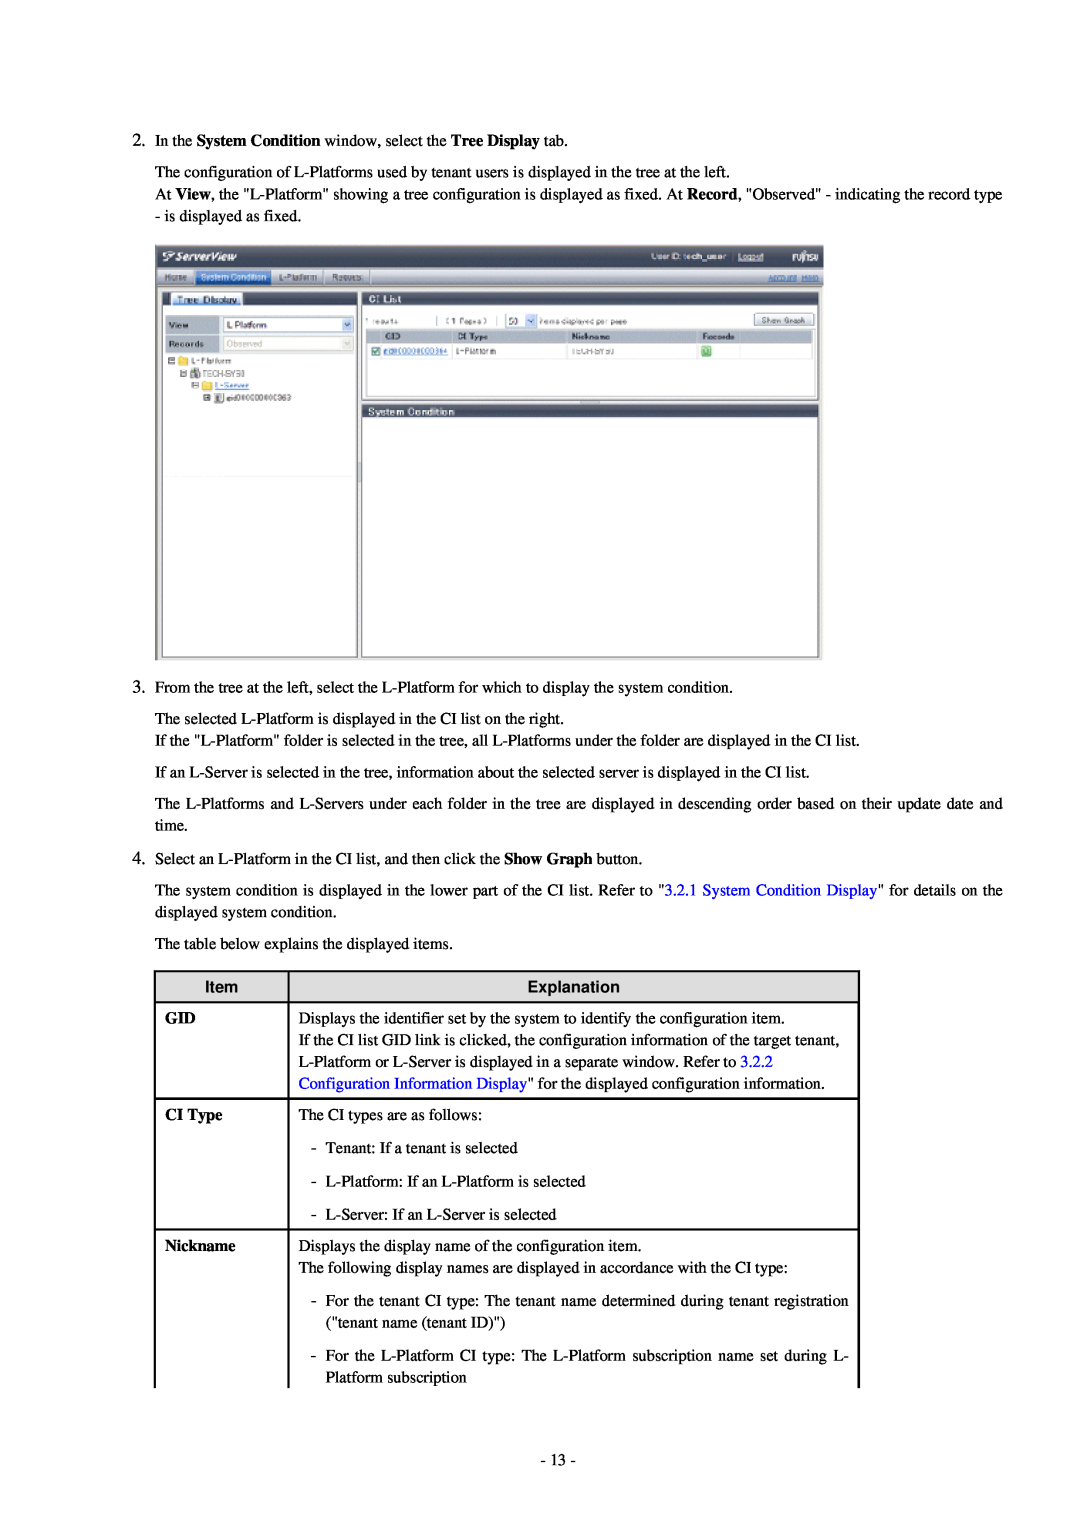 Fujitsu V3.0.0 manual Explanation, CI Type, Nickname 